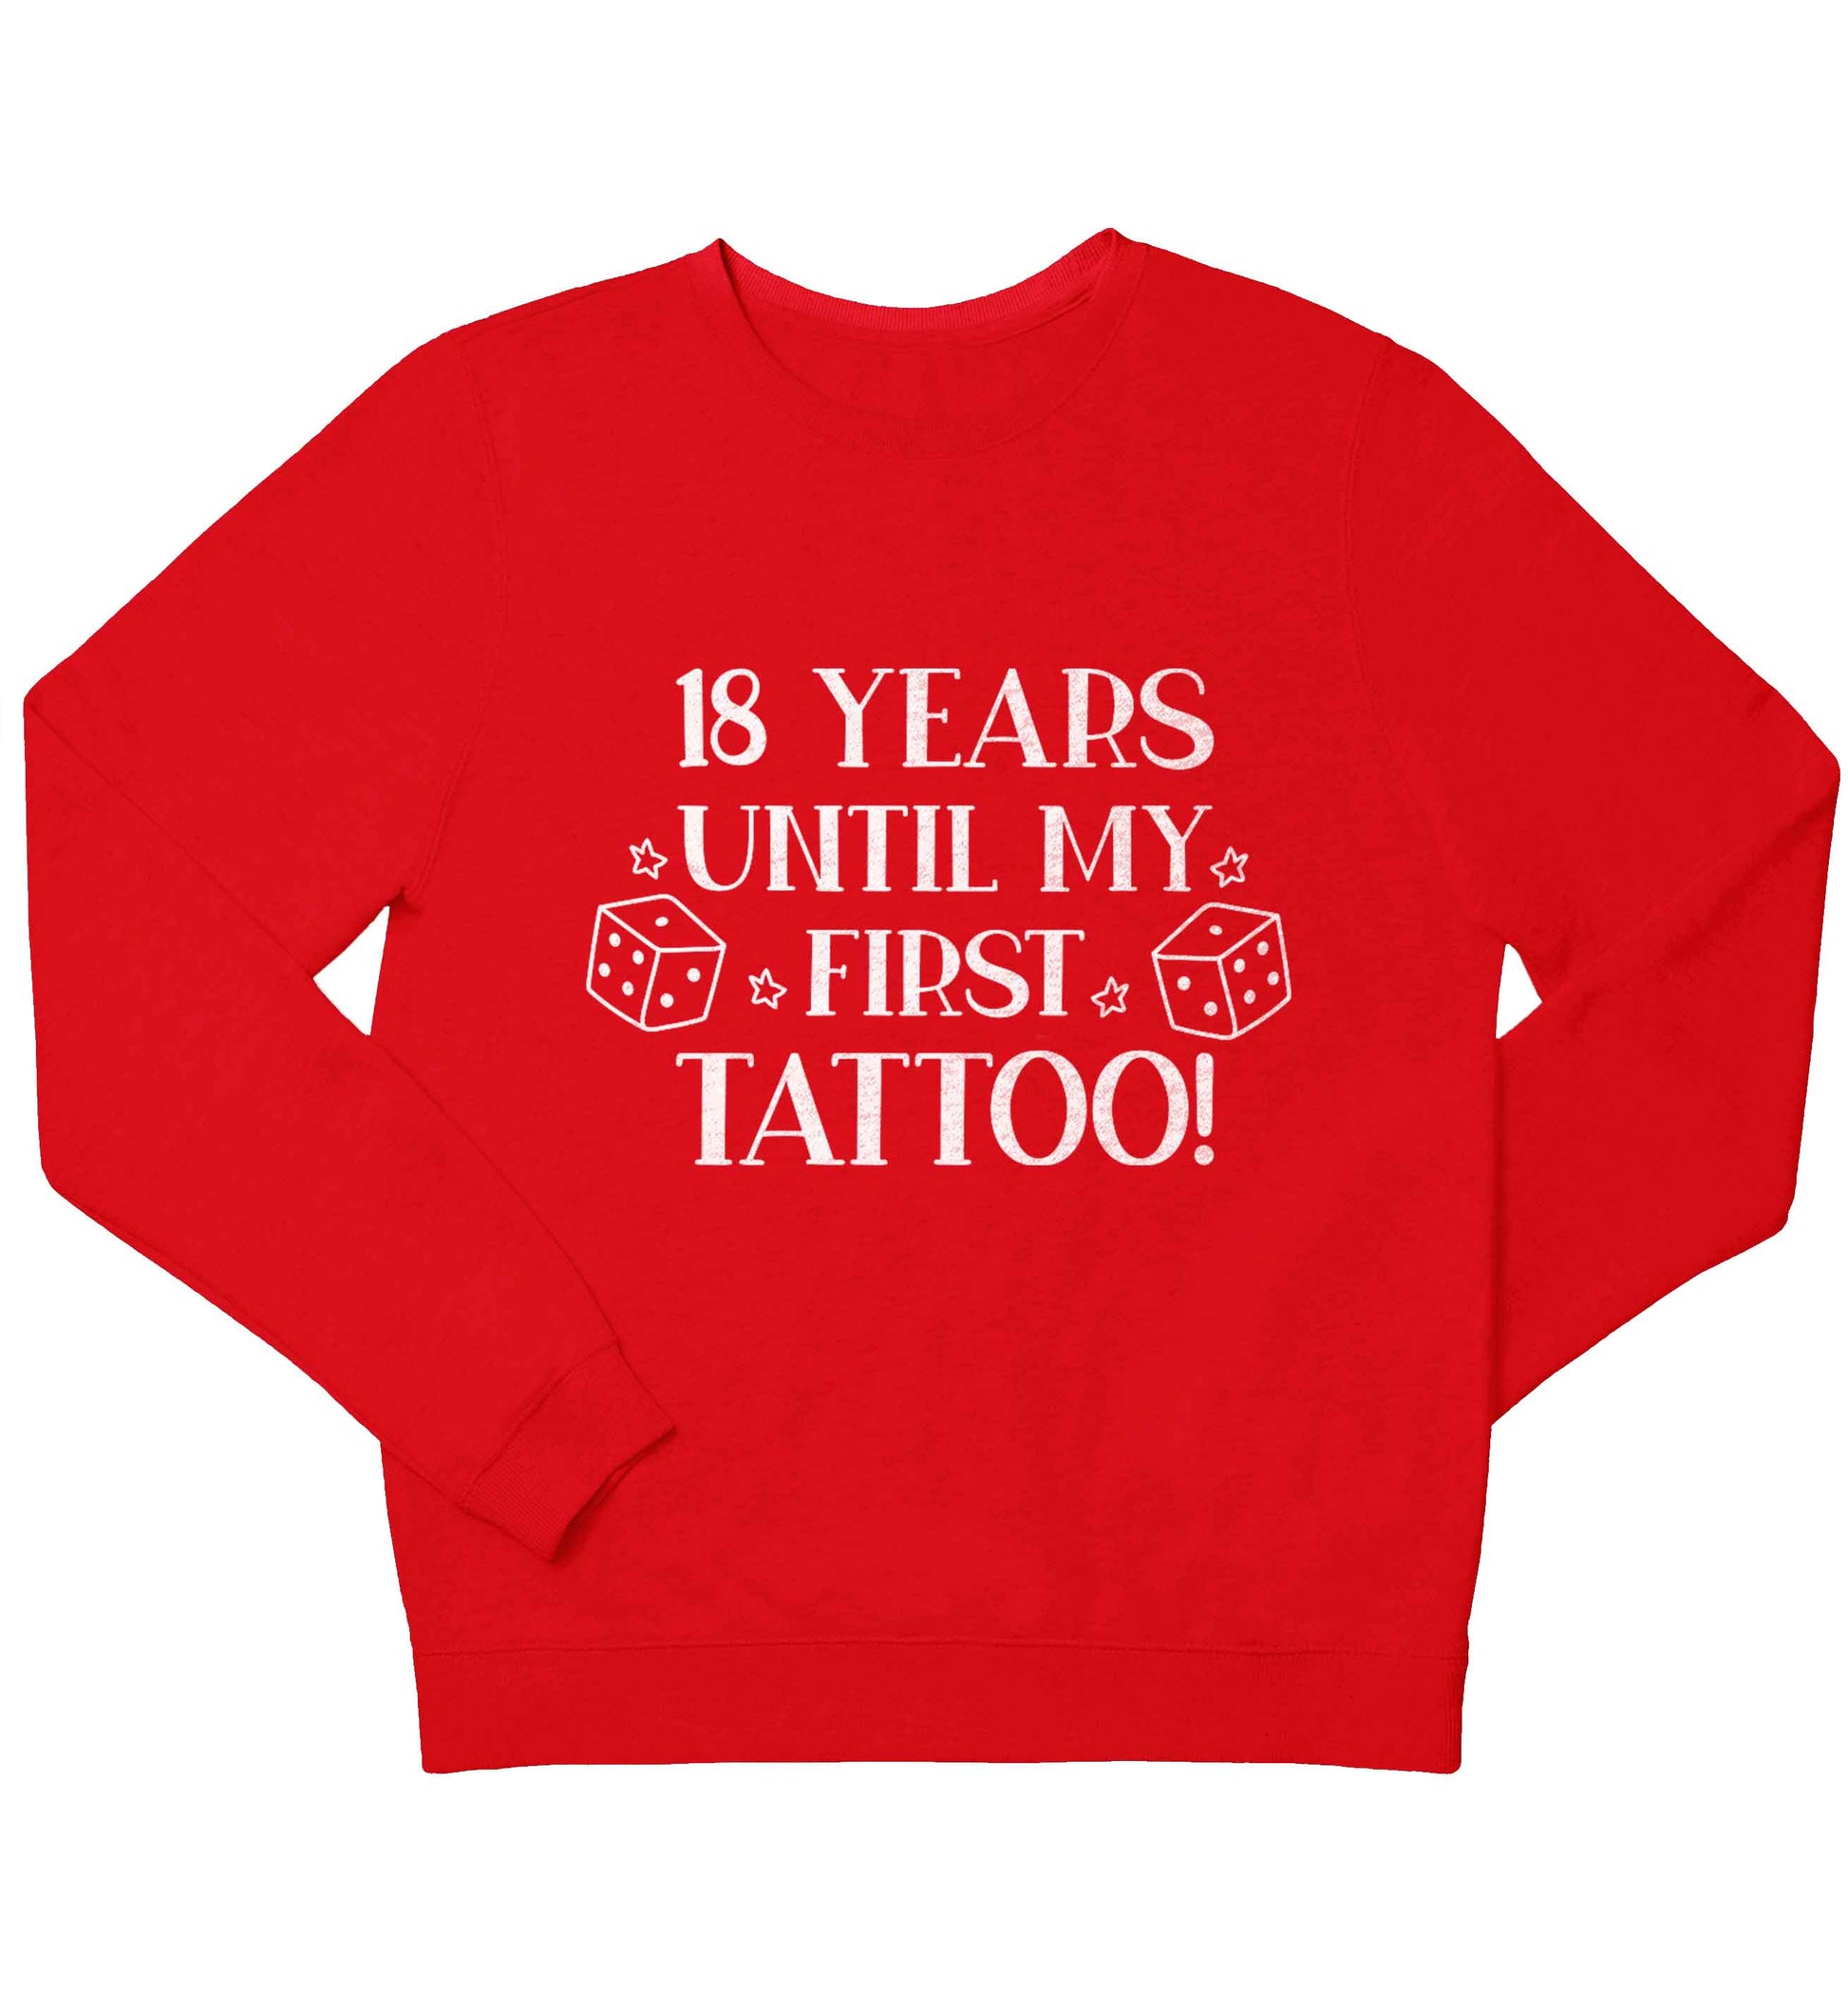 18 Years Until my First Tattoo children's grey sweater 12-13 Years